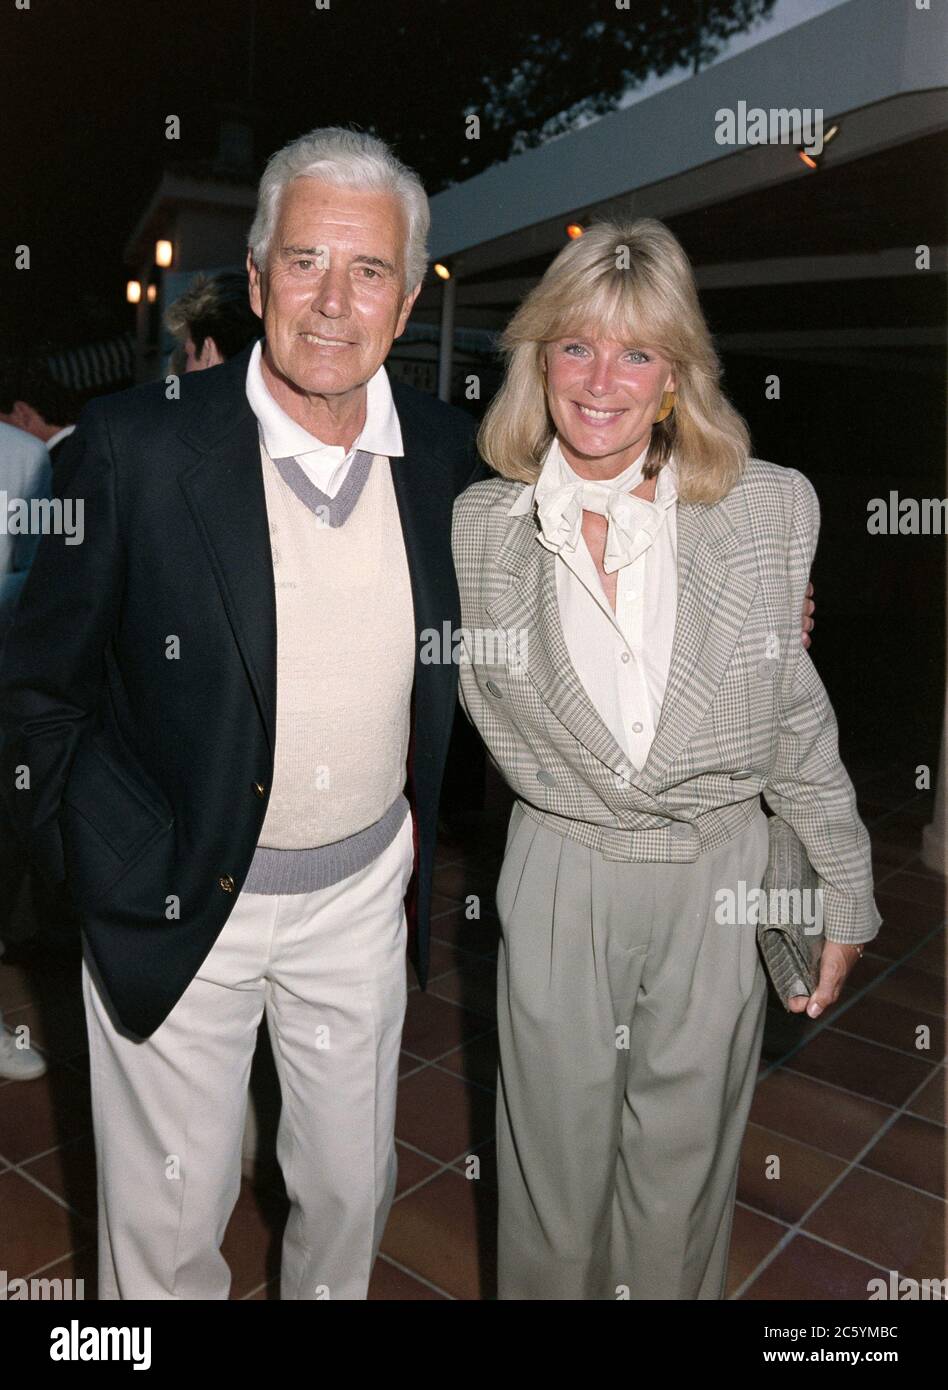 ARCHIV: MONACO: JUNI 1988: Linda Evans & John Forsythe beim Celebrity Tennis Turnier in Monaco. Datei Foto © Paul Smith/Featureflash Stockfoto